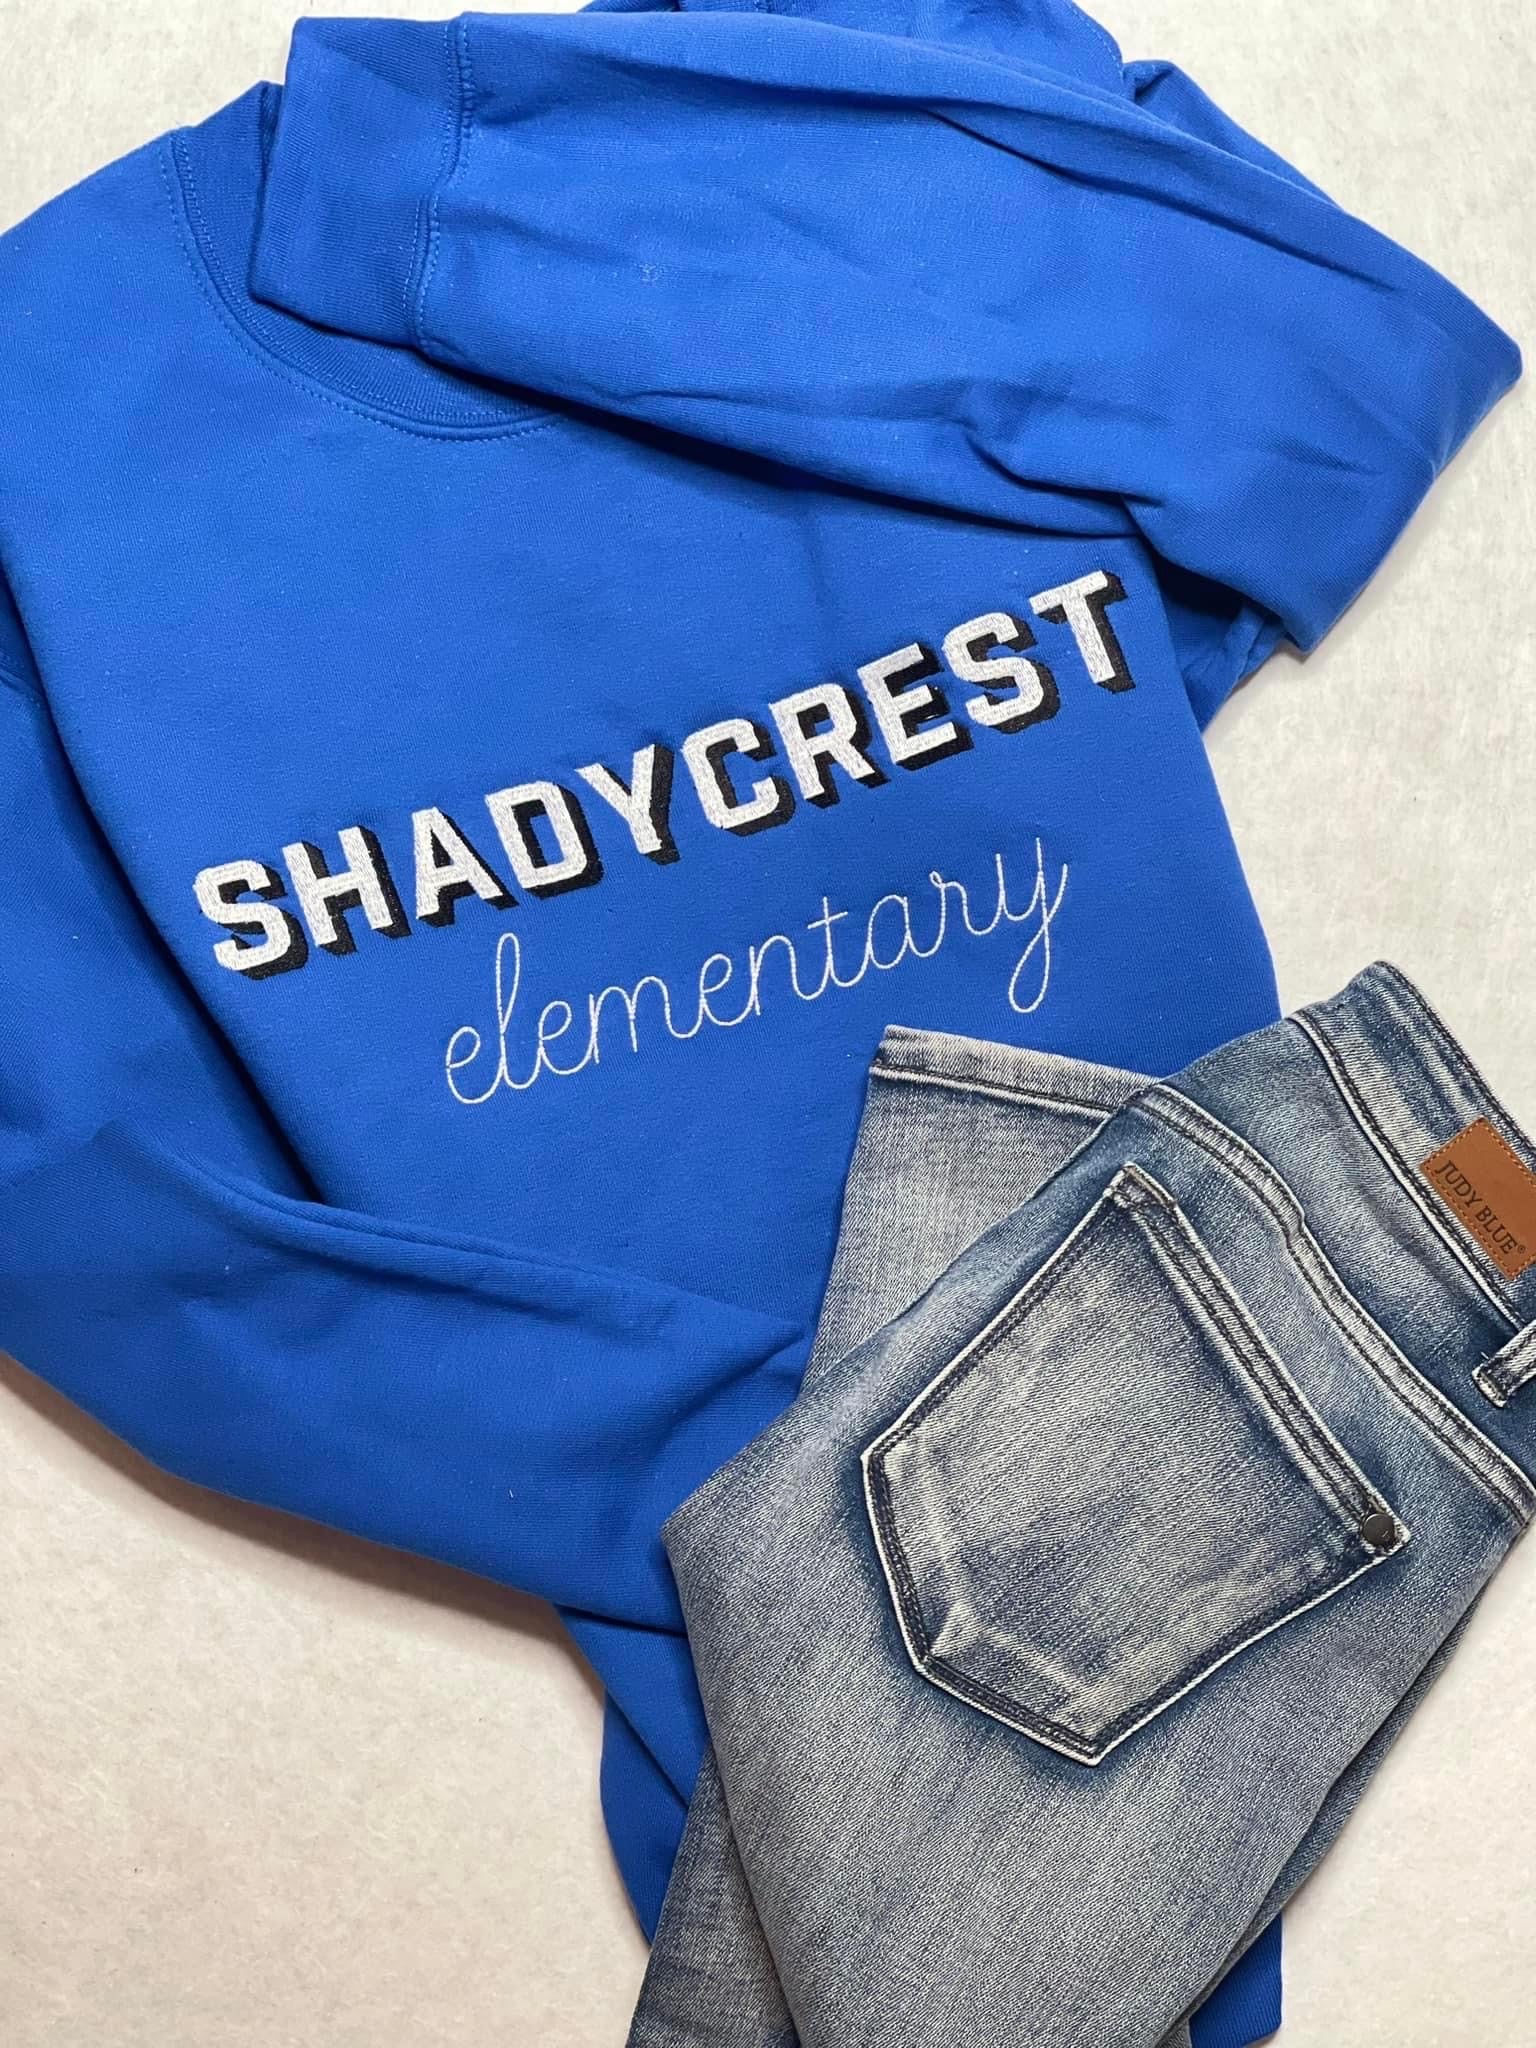 Shadycrest Sweatshirt